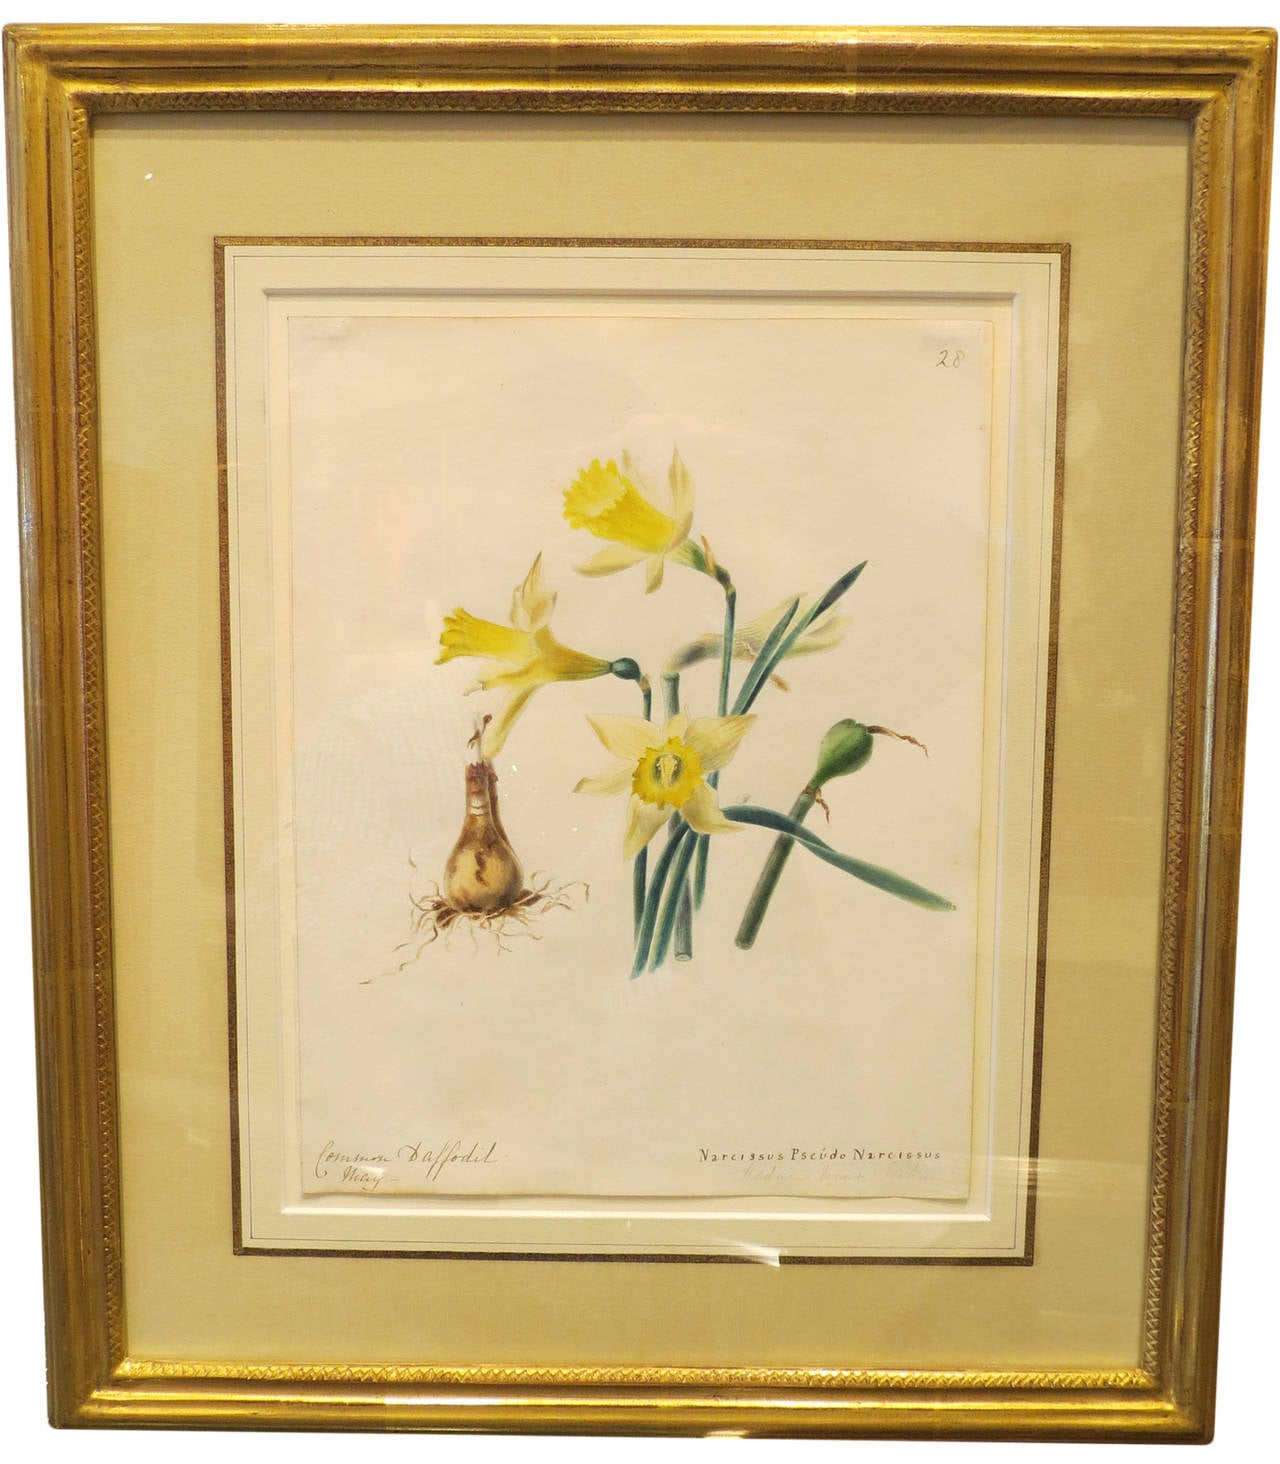 "Common Daffodil - Narcissus Pseudo Narcissus"